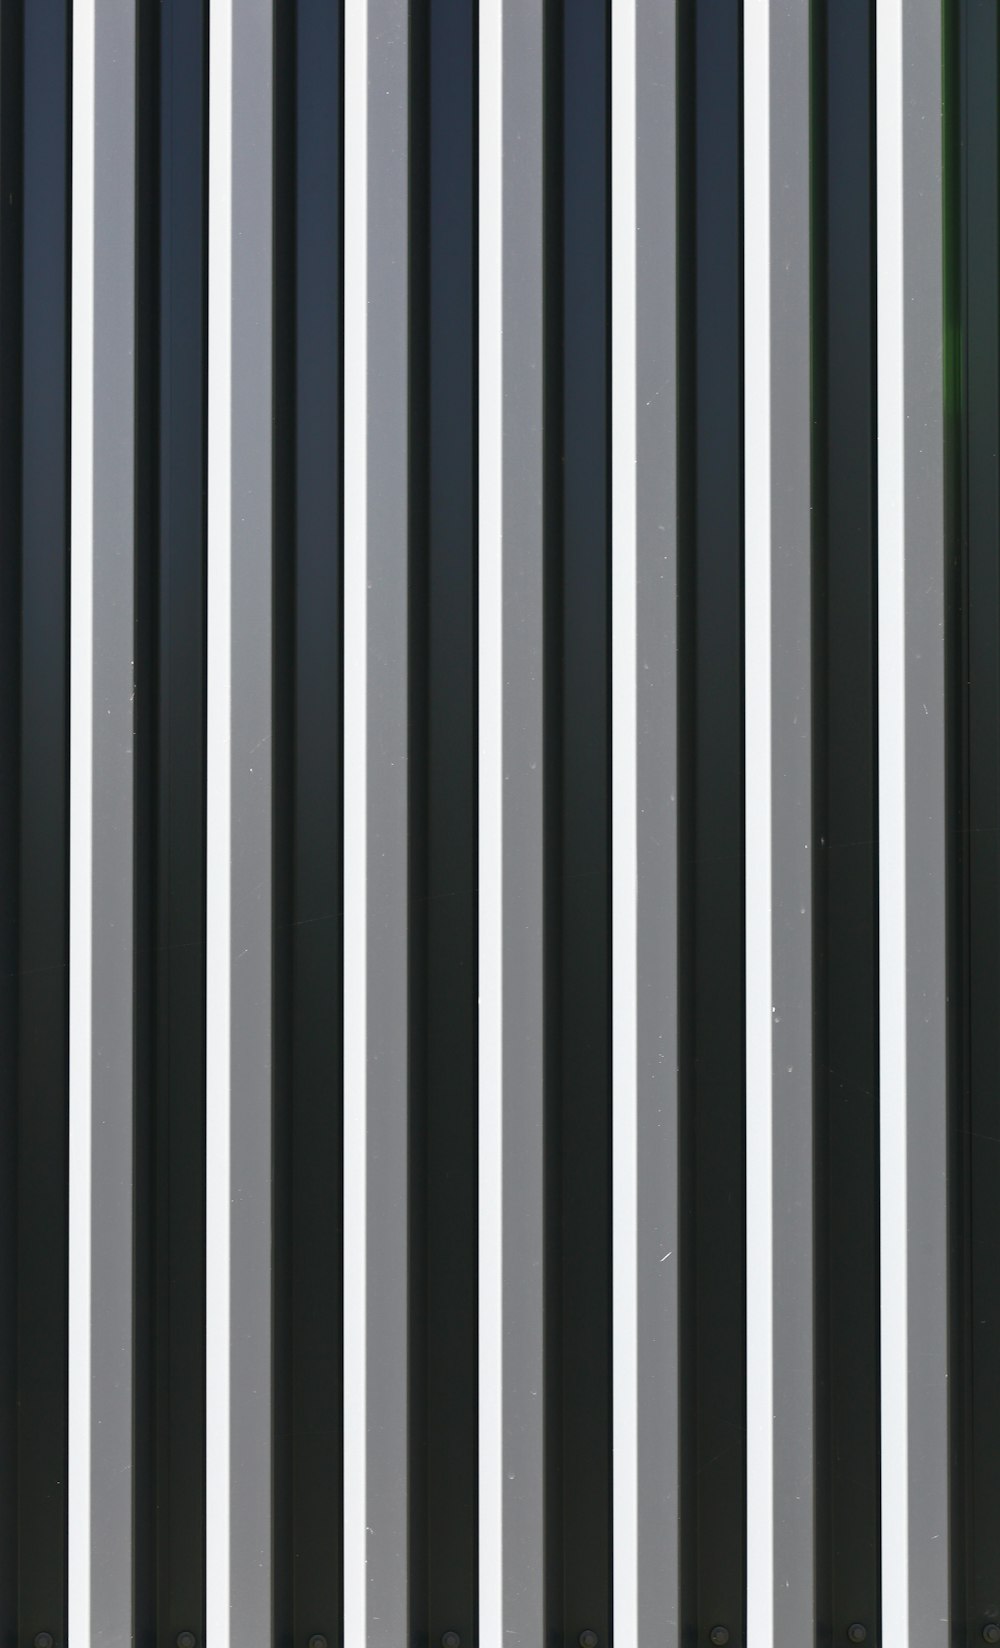 black white and green striped textile